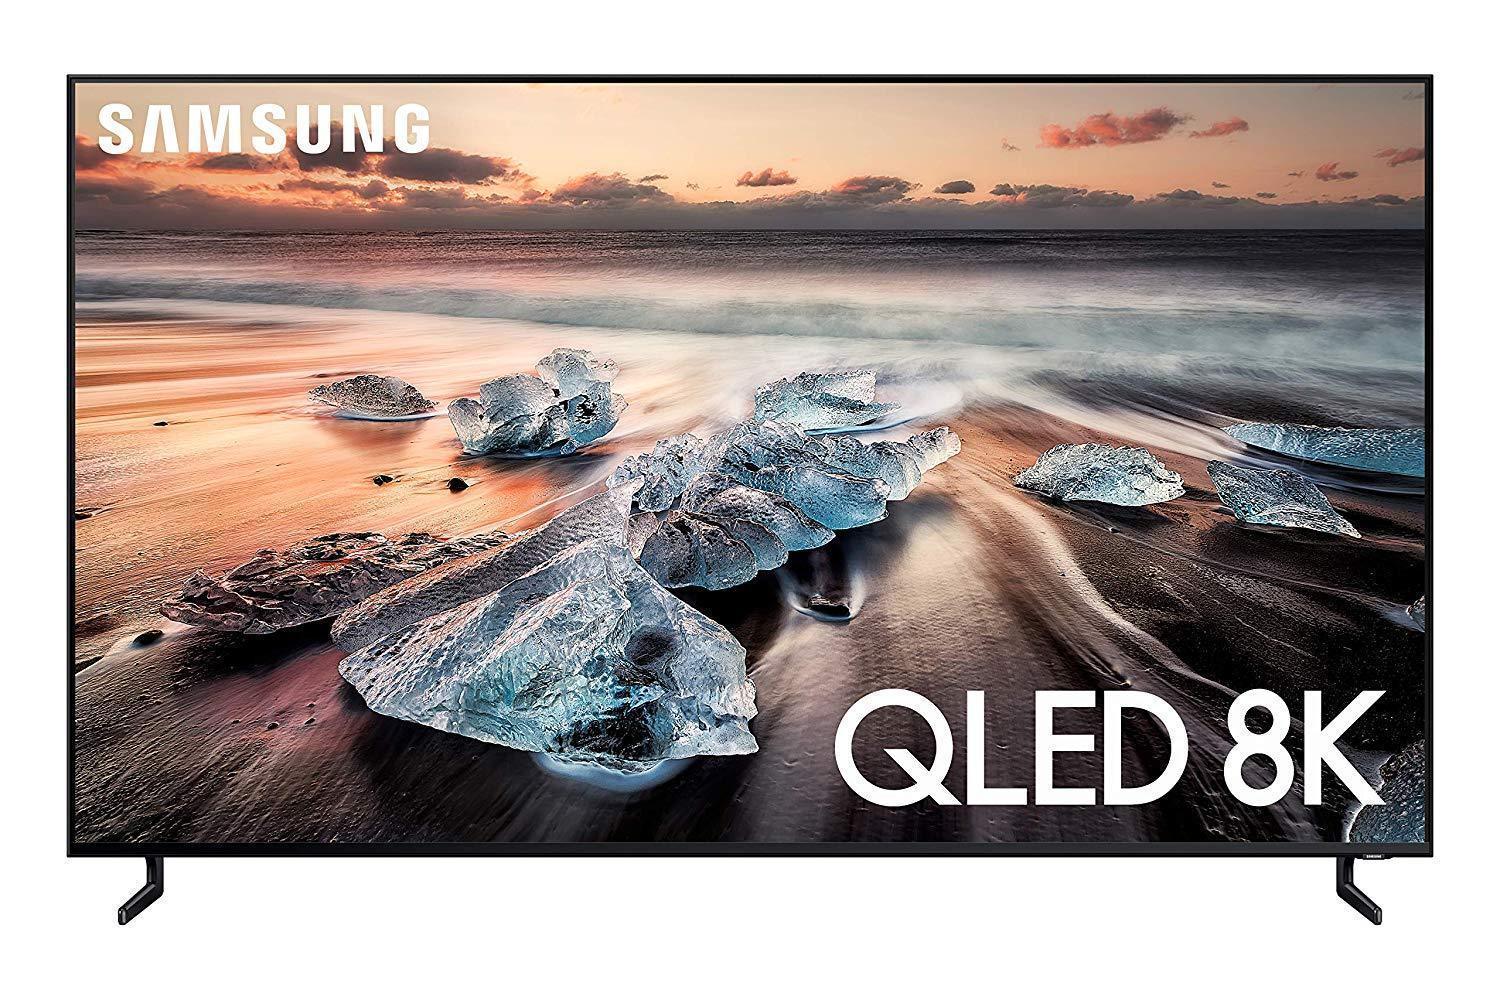 Samsung QN75Q900 Flat 75-Inch QLED 8K UHD Q900 Series Smart TV